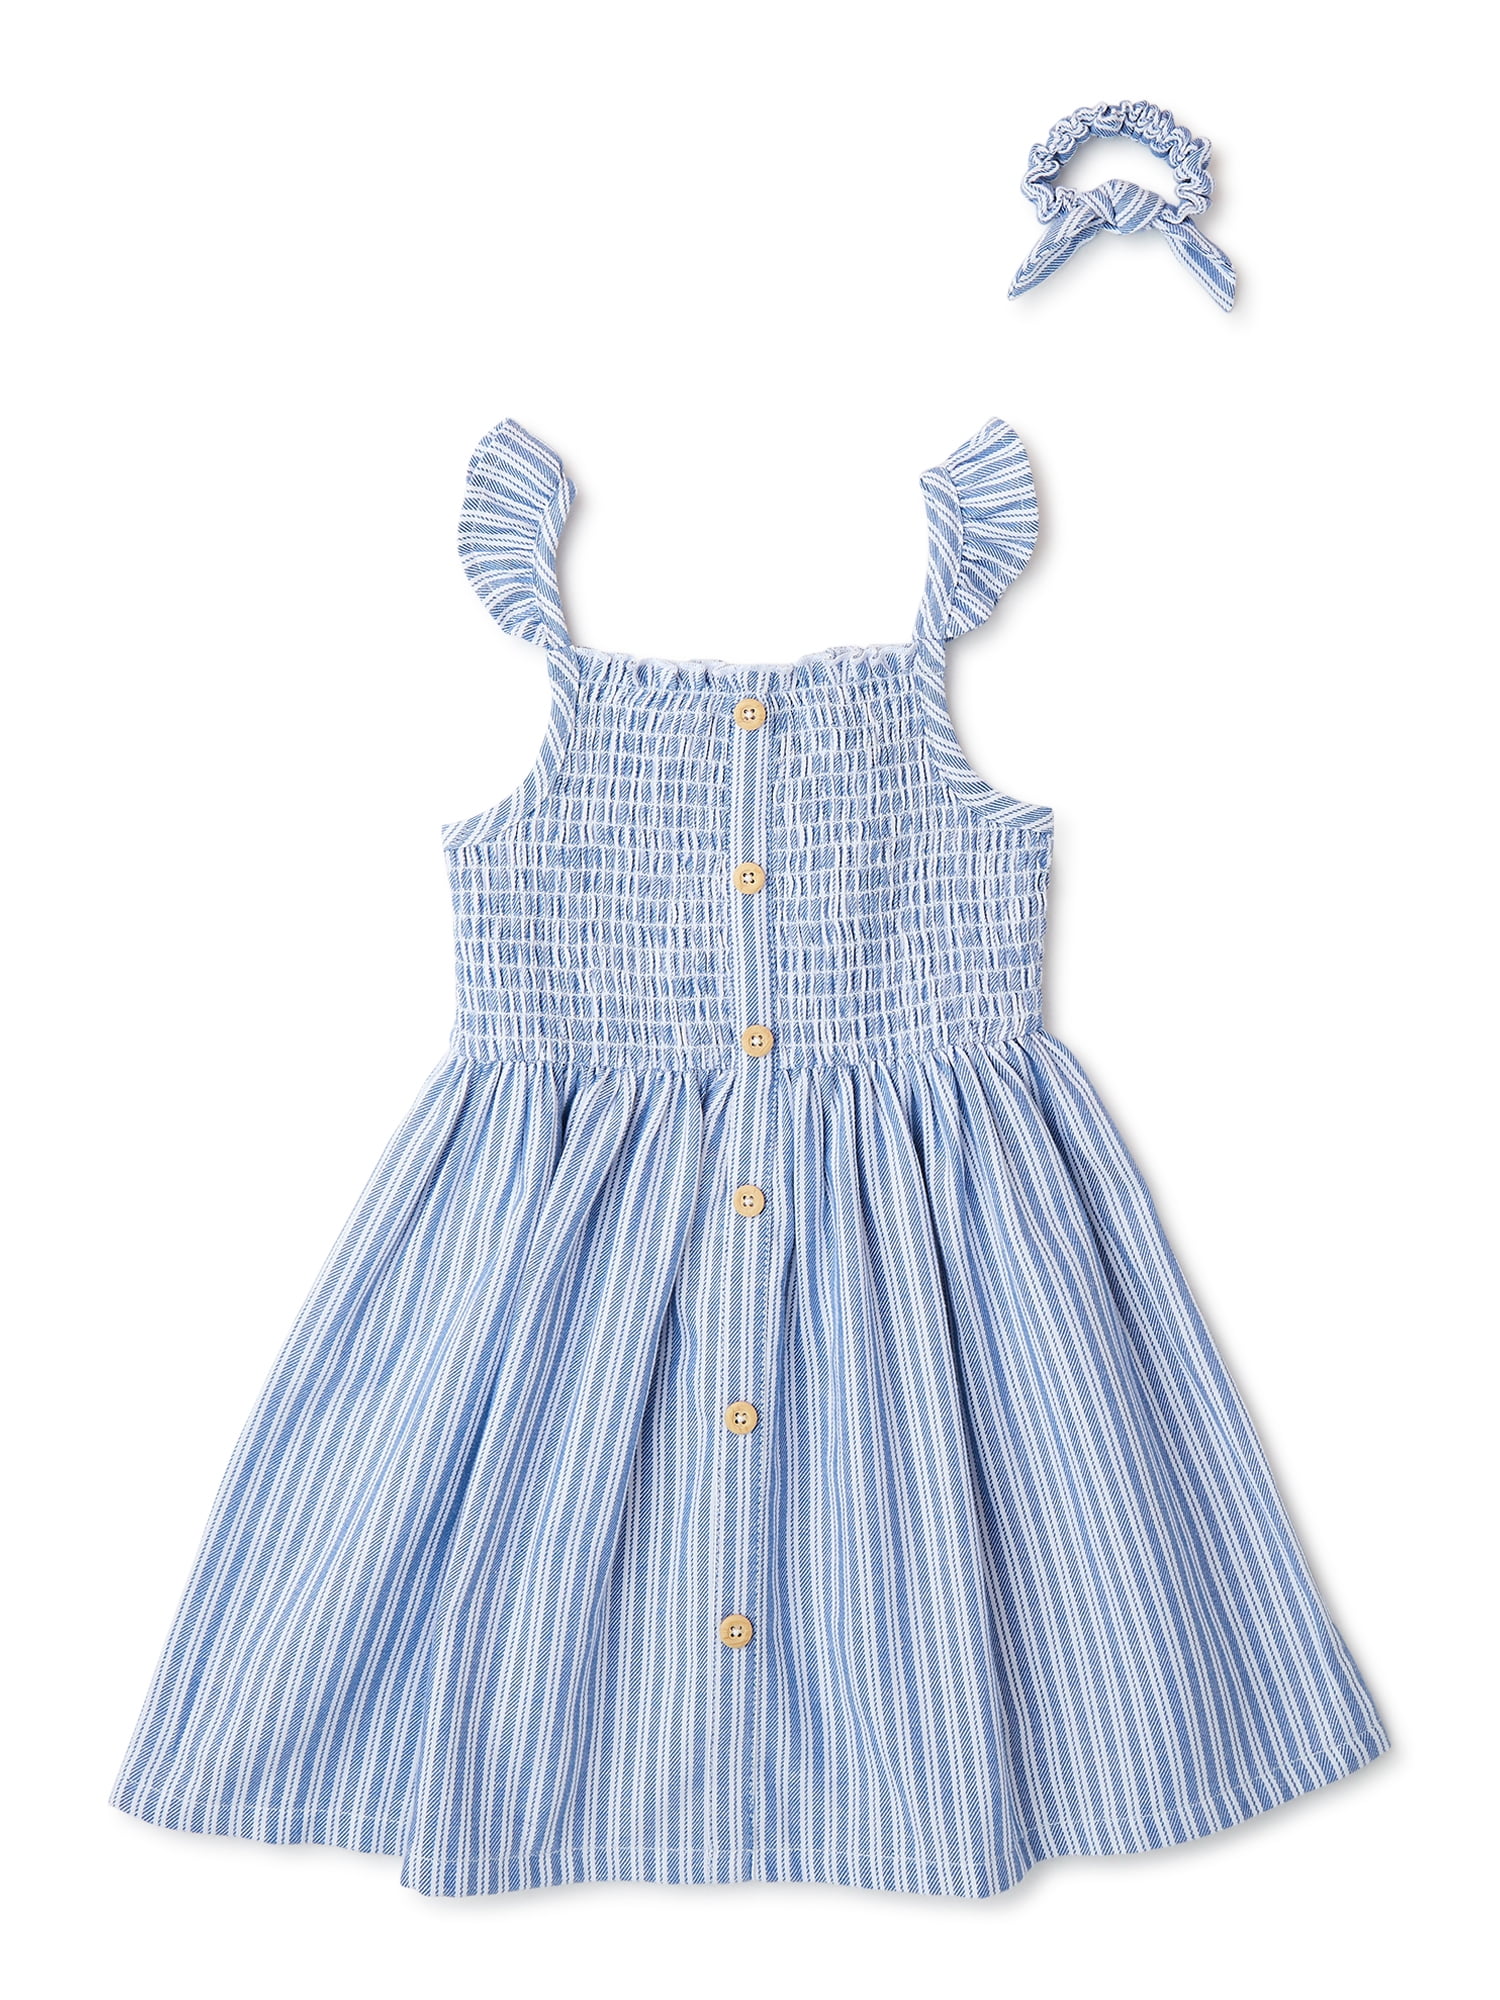 6-12M,18-24M 4T Blue & Gray NEW Go Gently Baby Girls Striped Dress Sizes 3-6M 